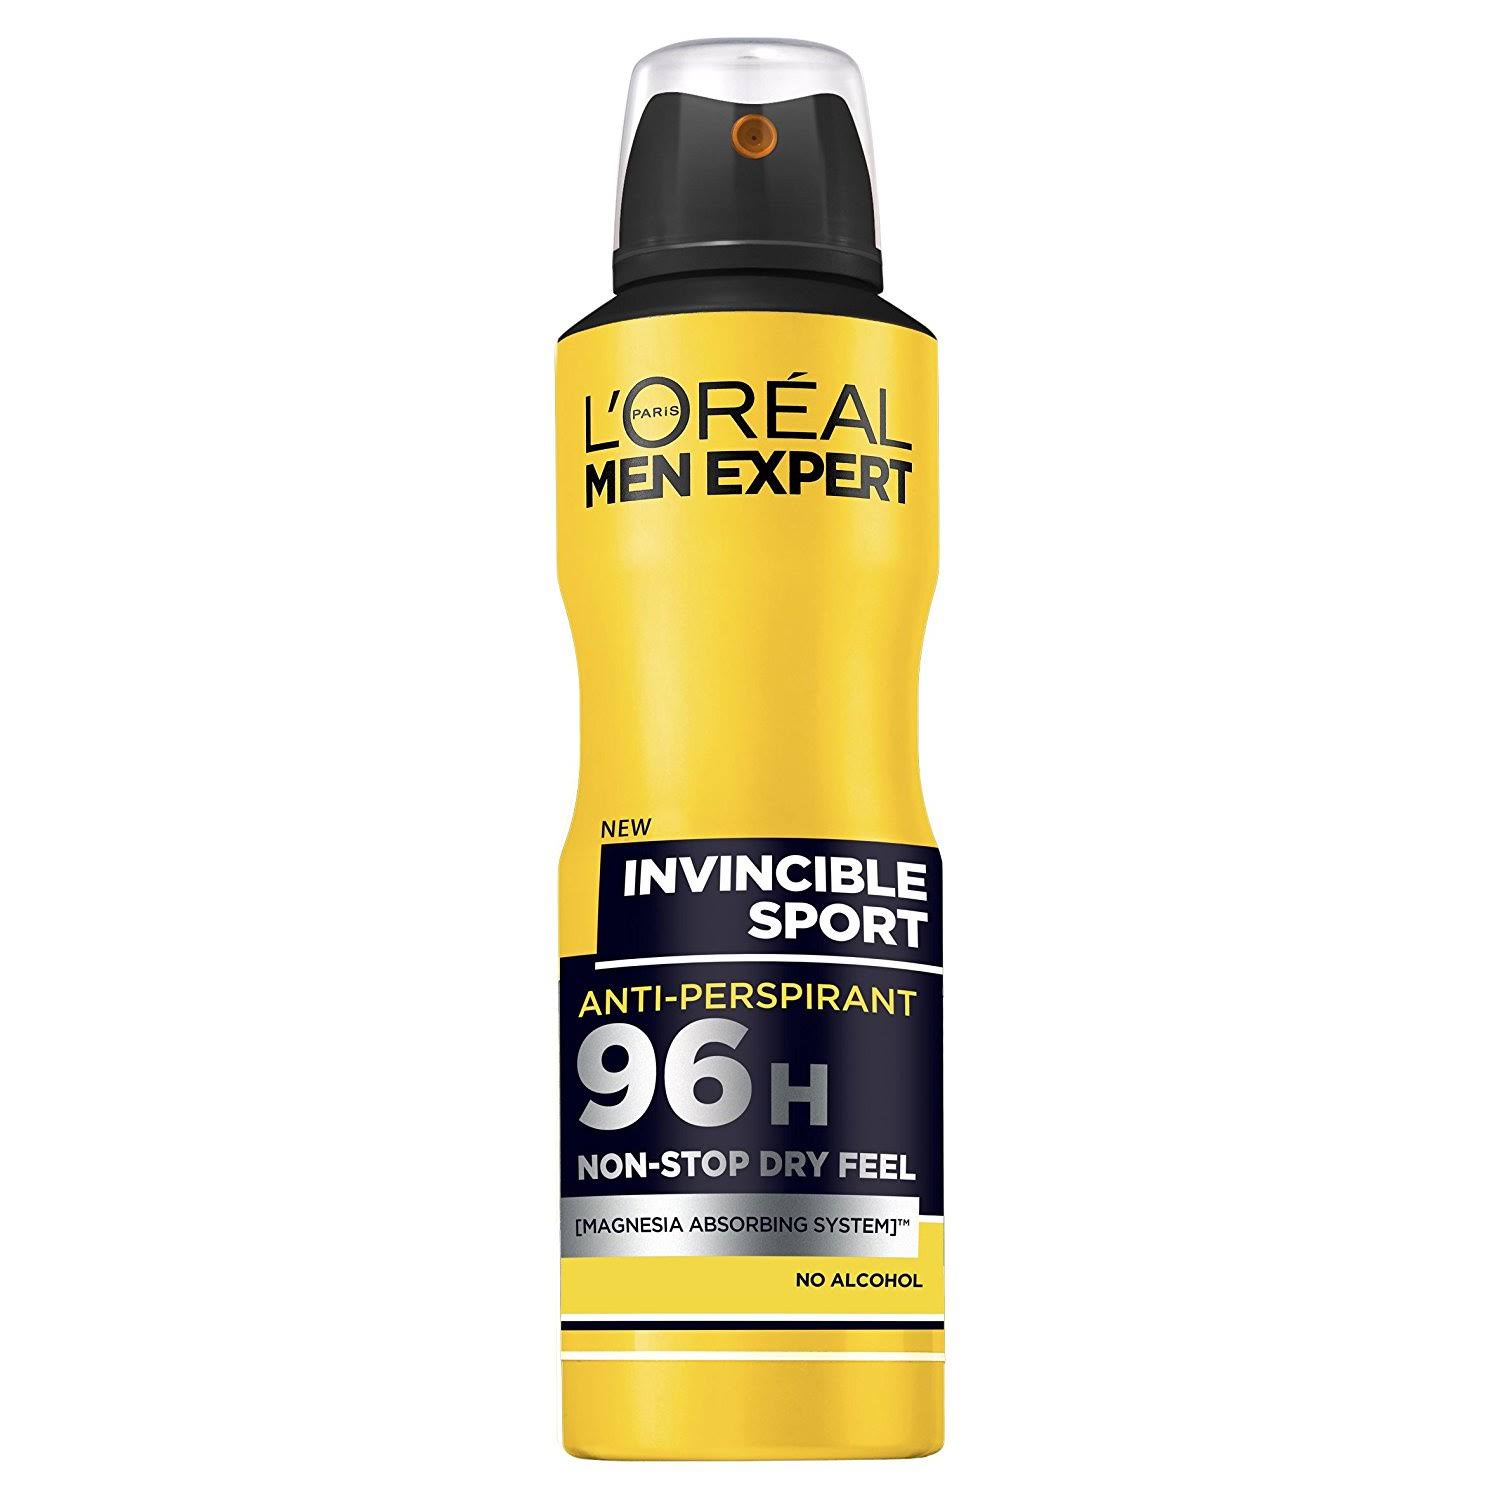 L’Oreal Men Expert Anti Perspirant Deodorant - Invincible Sport